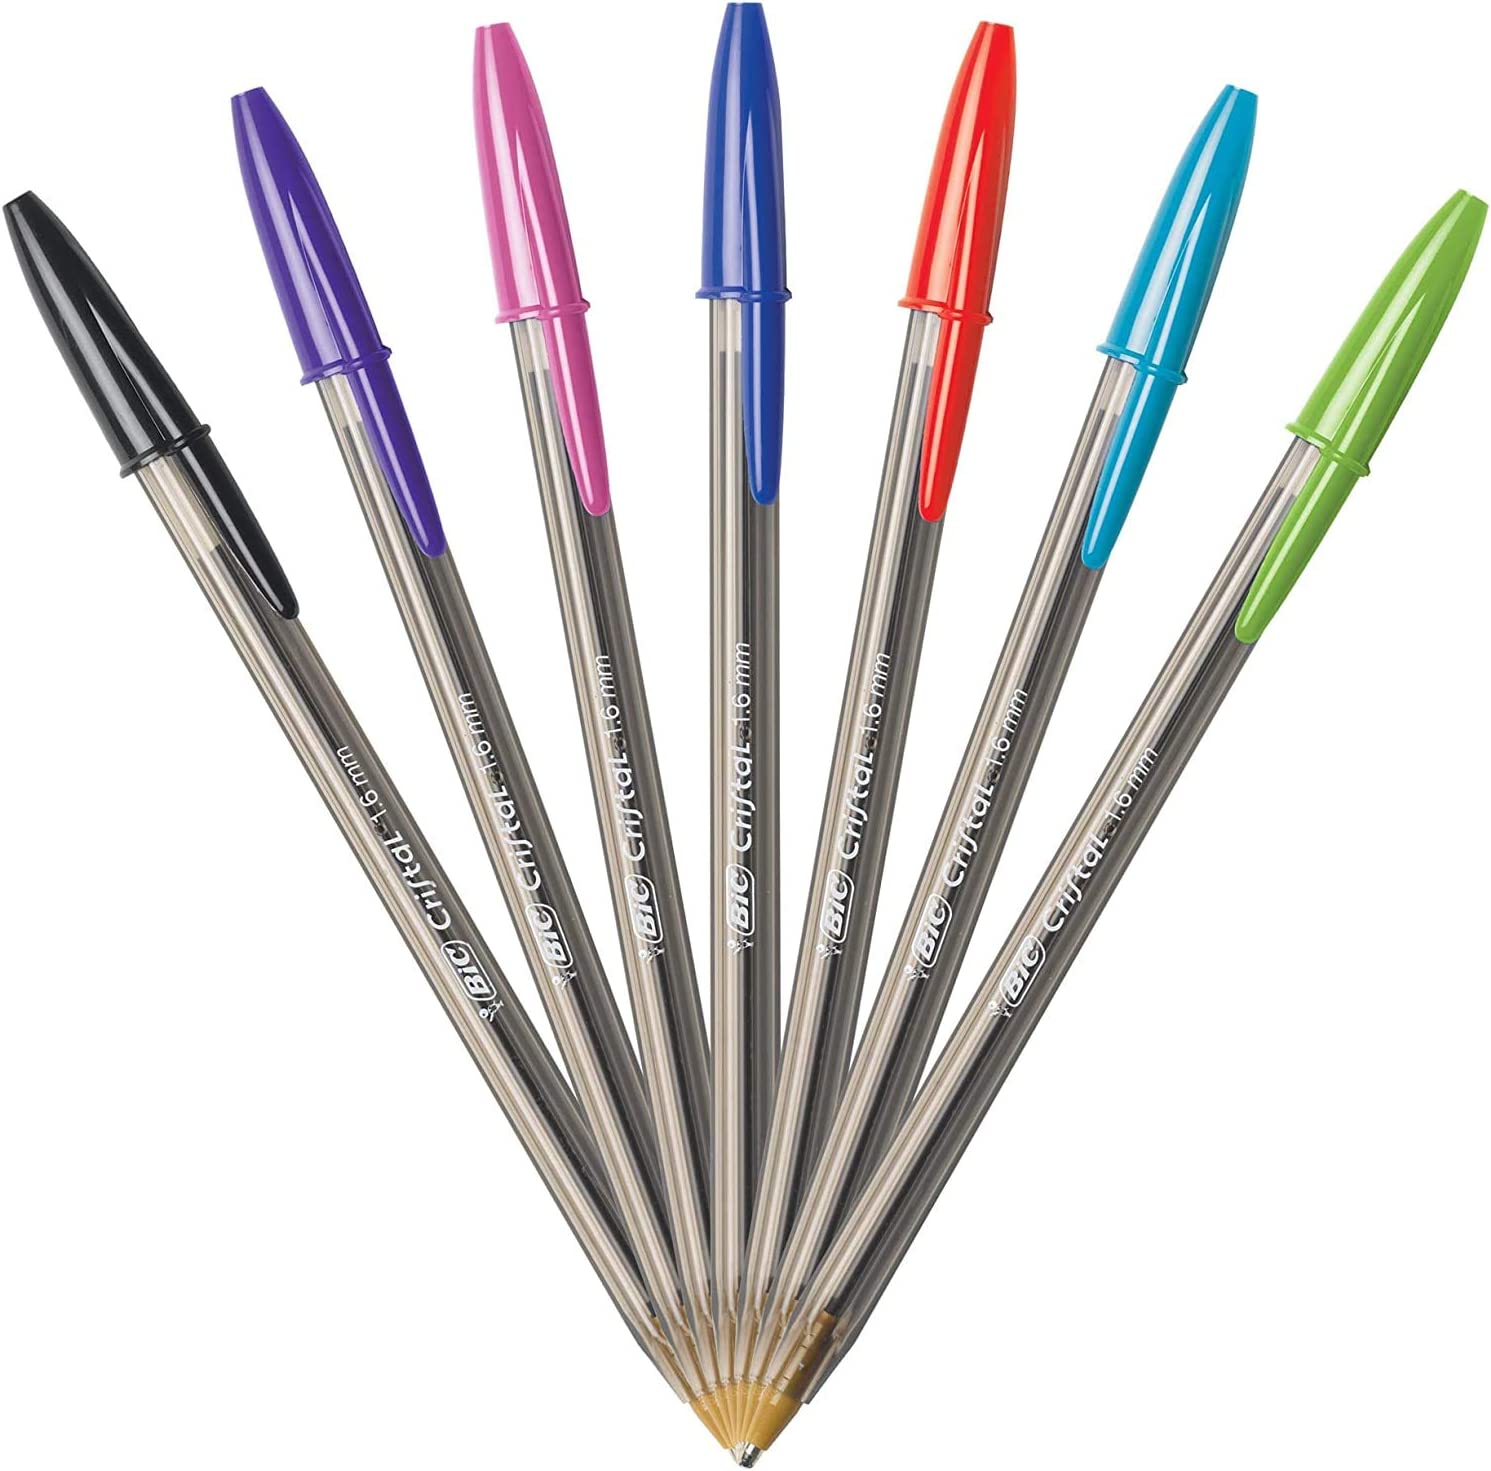 BIC Cristal Xtra Bold Fashion Ballpoint Pens close up